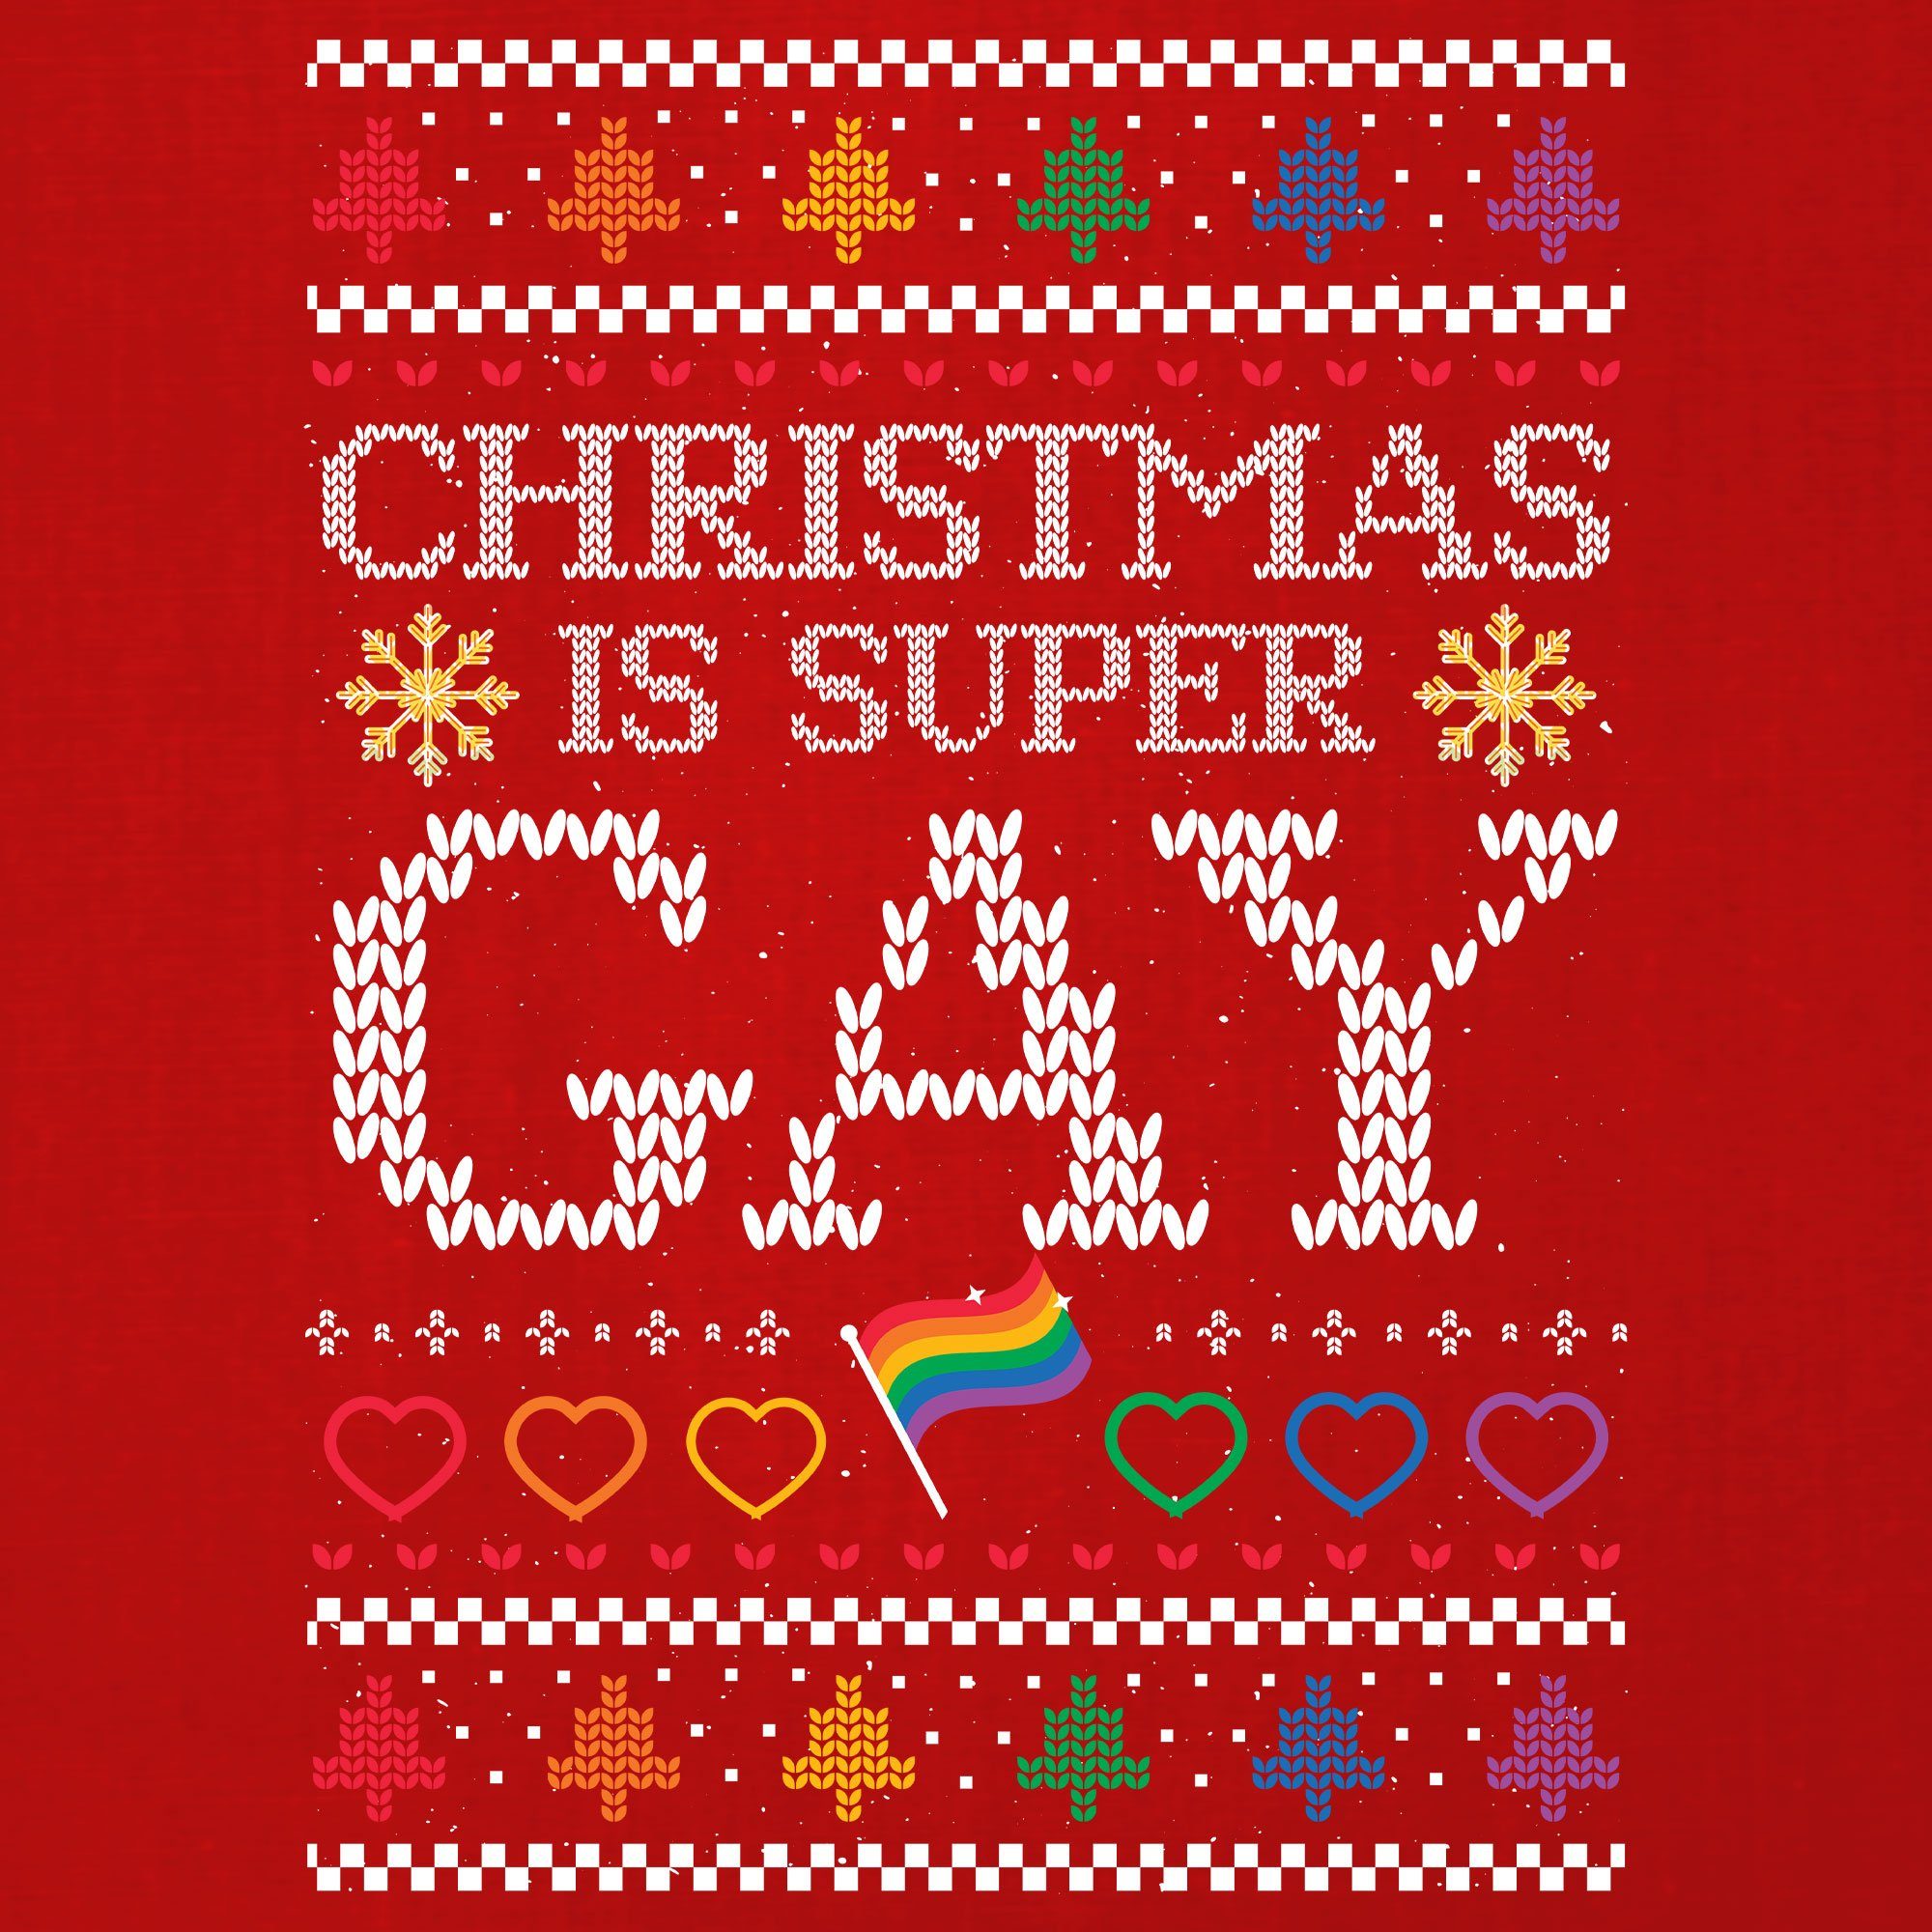 T-Shi Gay X-mas - (1-tlg) Kurzarmshirt Herren Quattro LGBT Weihnachten Rot Christmas Formatee Weihnachtsgeschenk